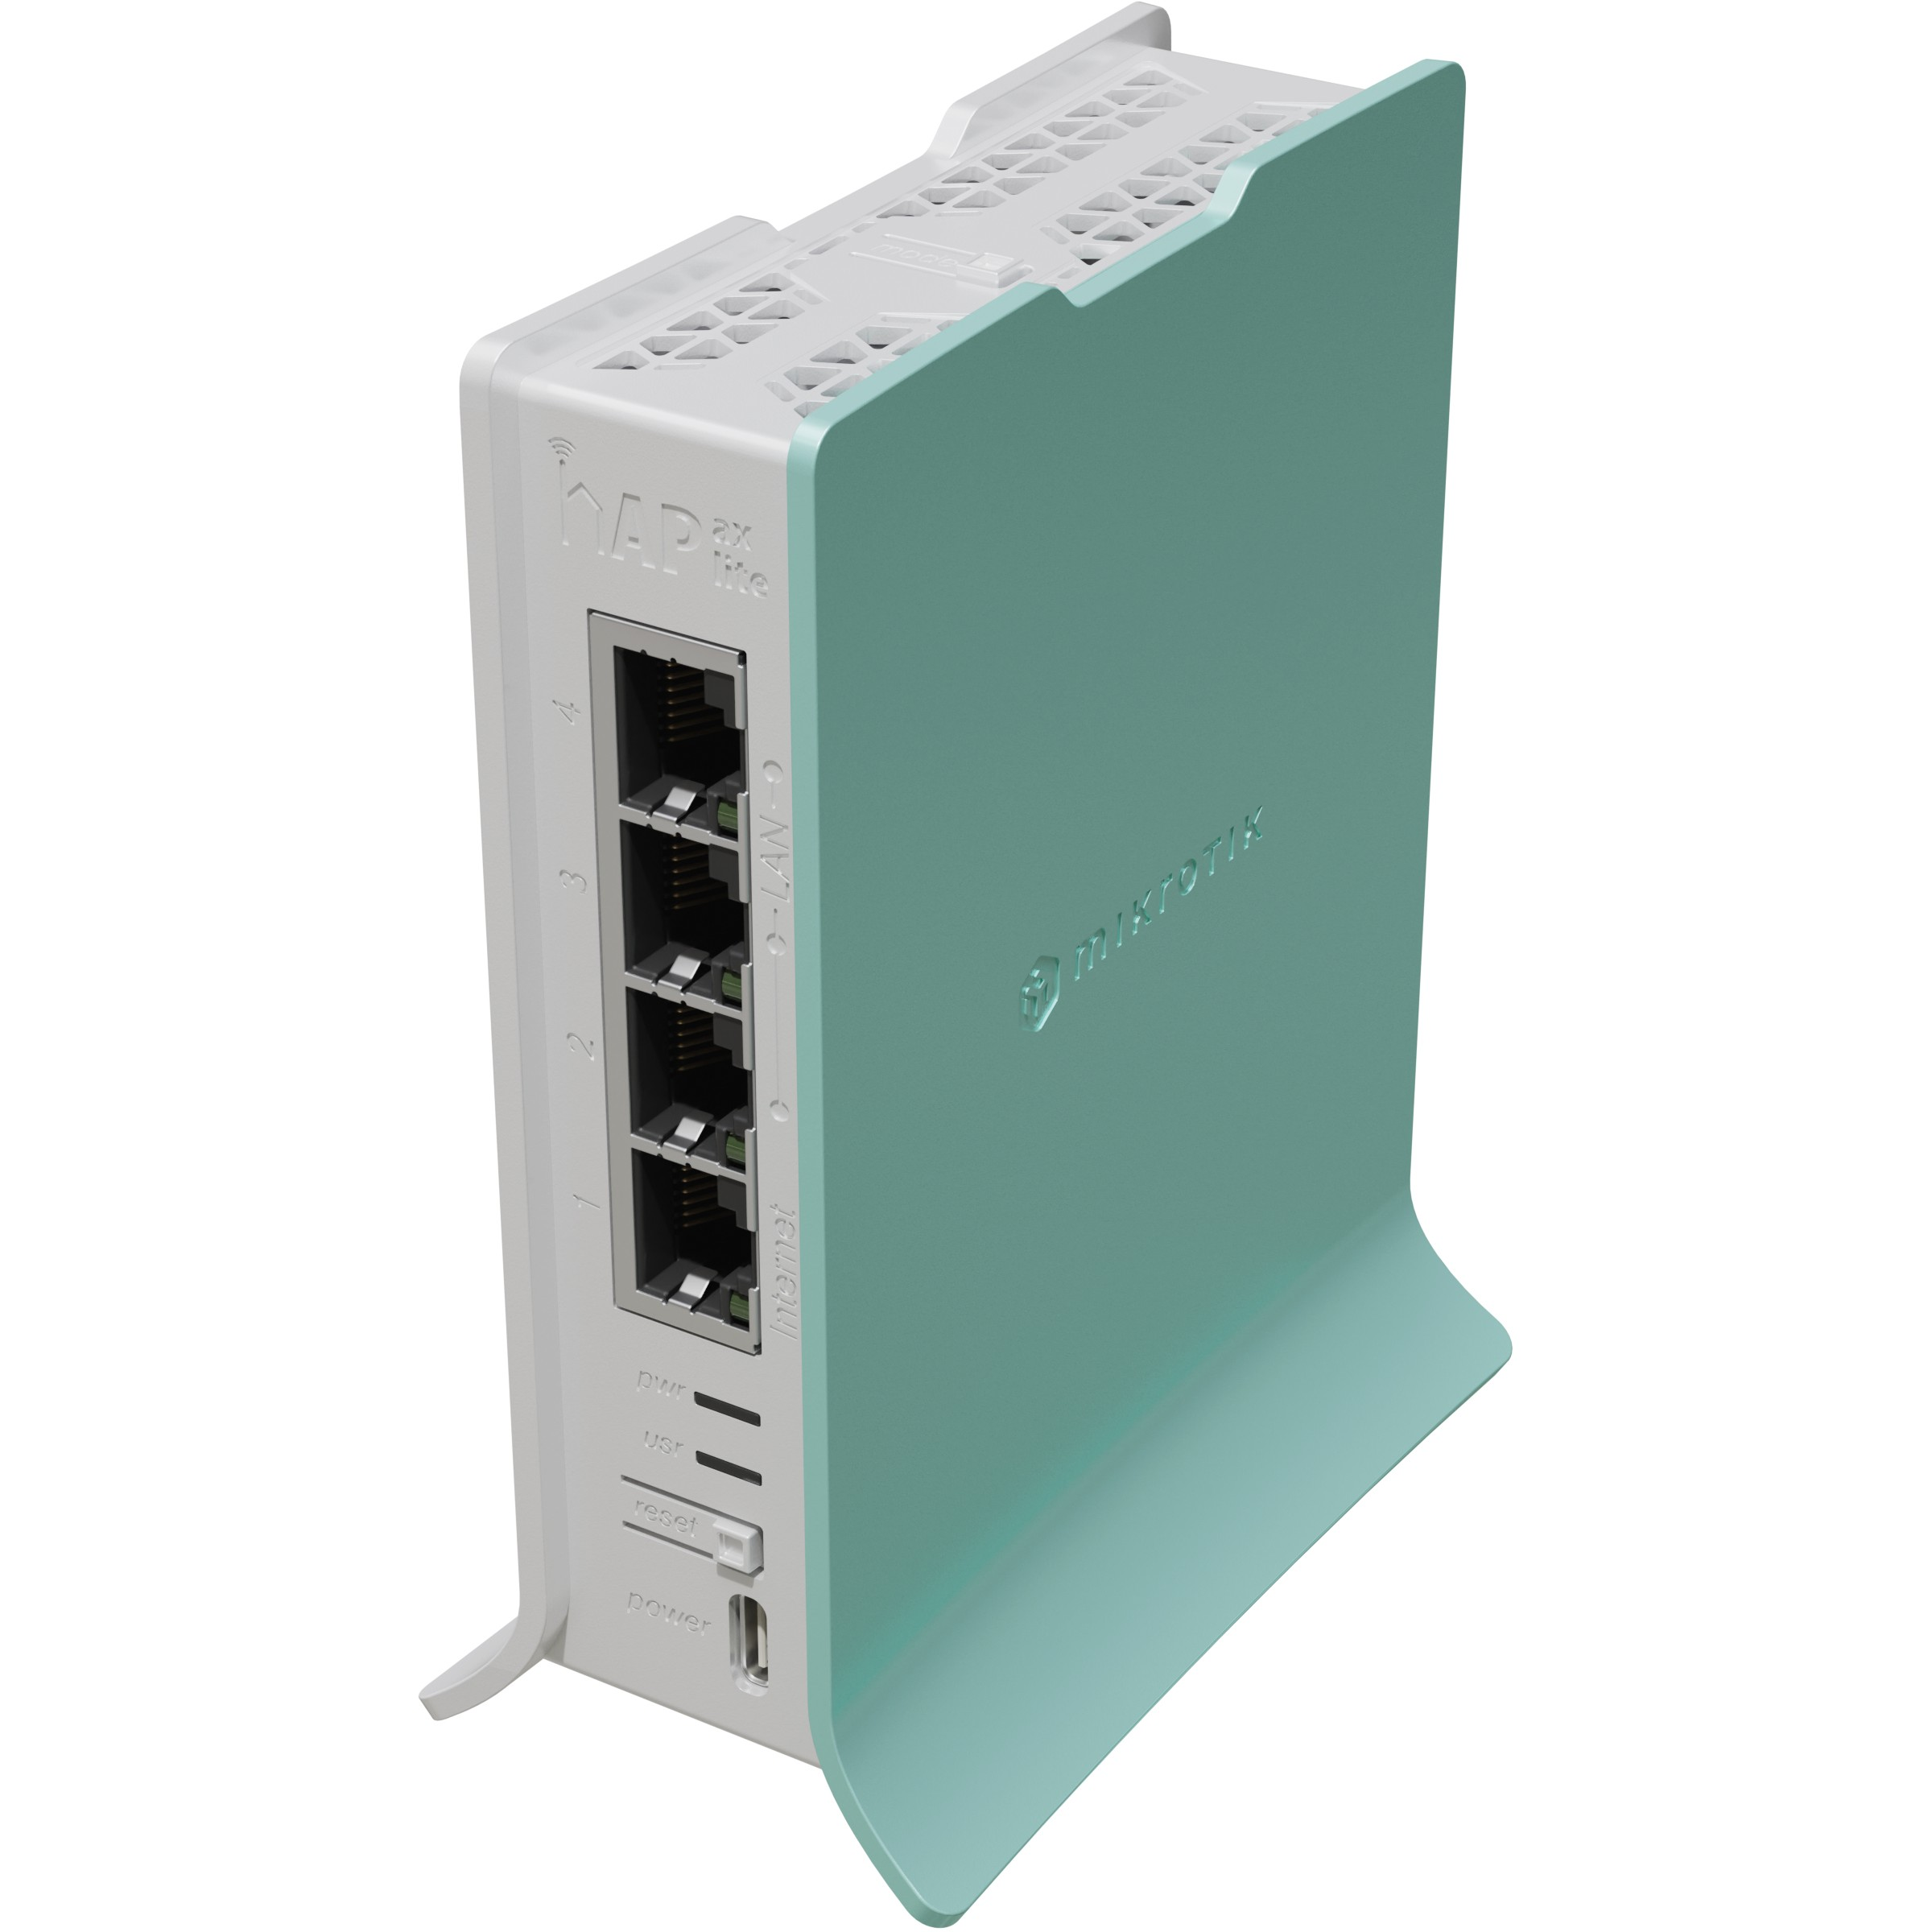 Netzwerk Accesspoints MIKROTIK wireless Mikrotik 4 hAP Router router